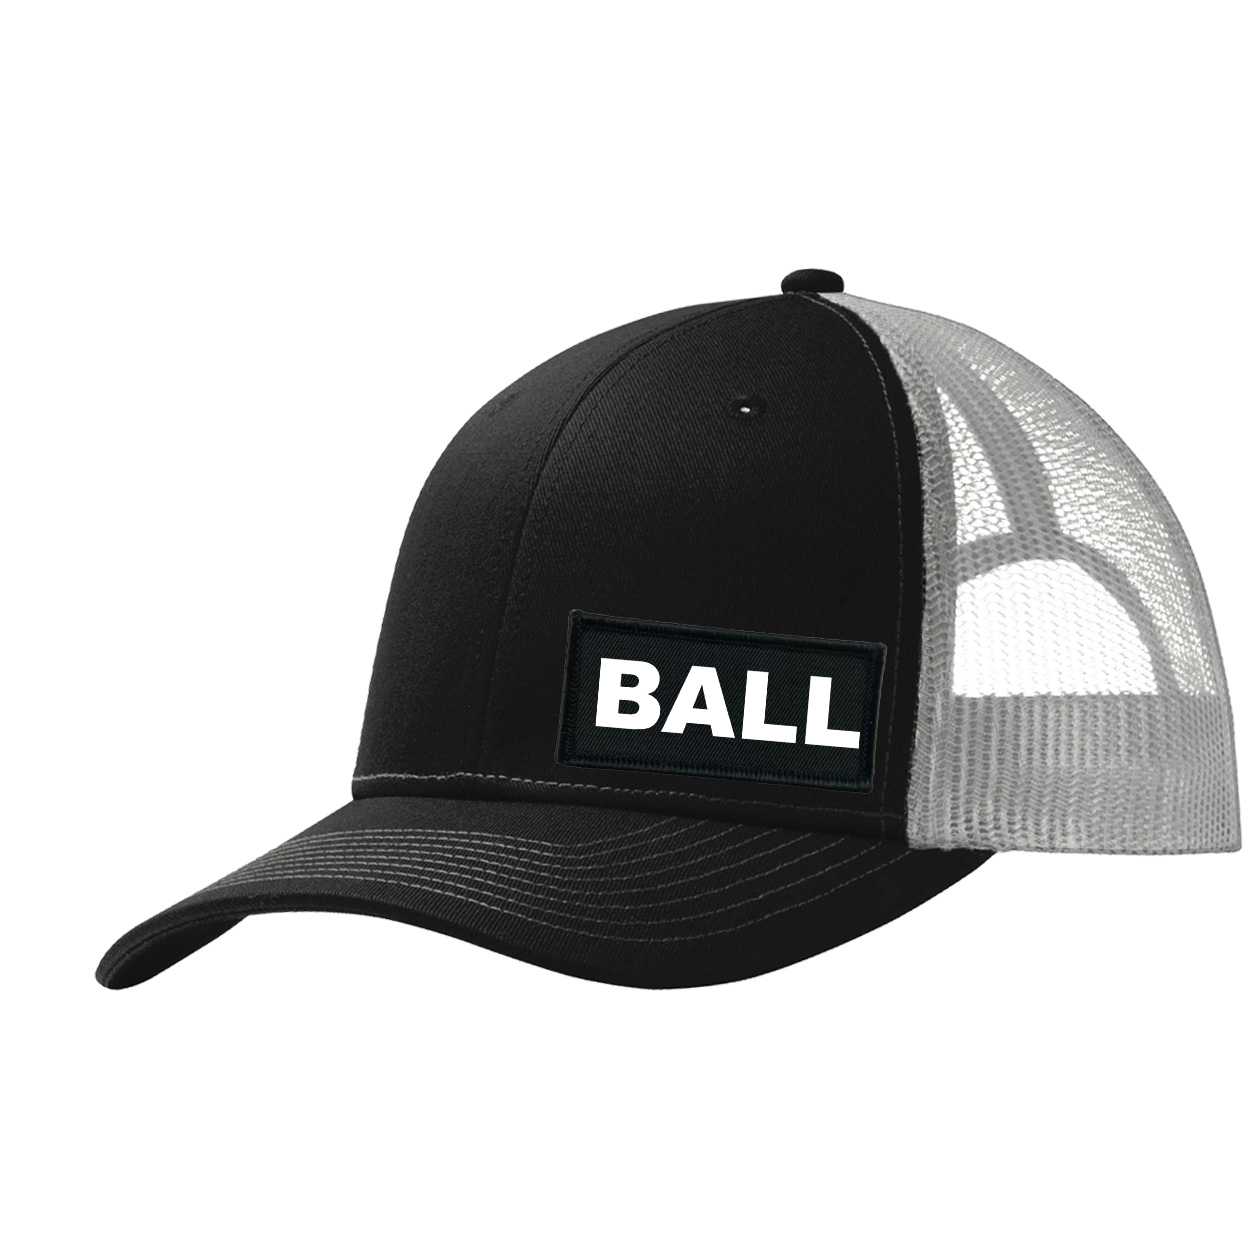 Ball Brand Logo Night Out Woven Patch Snapback Trucker Hat Black/Gray